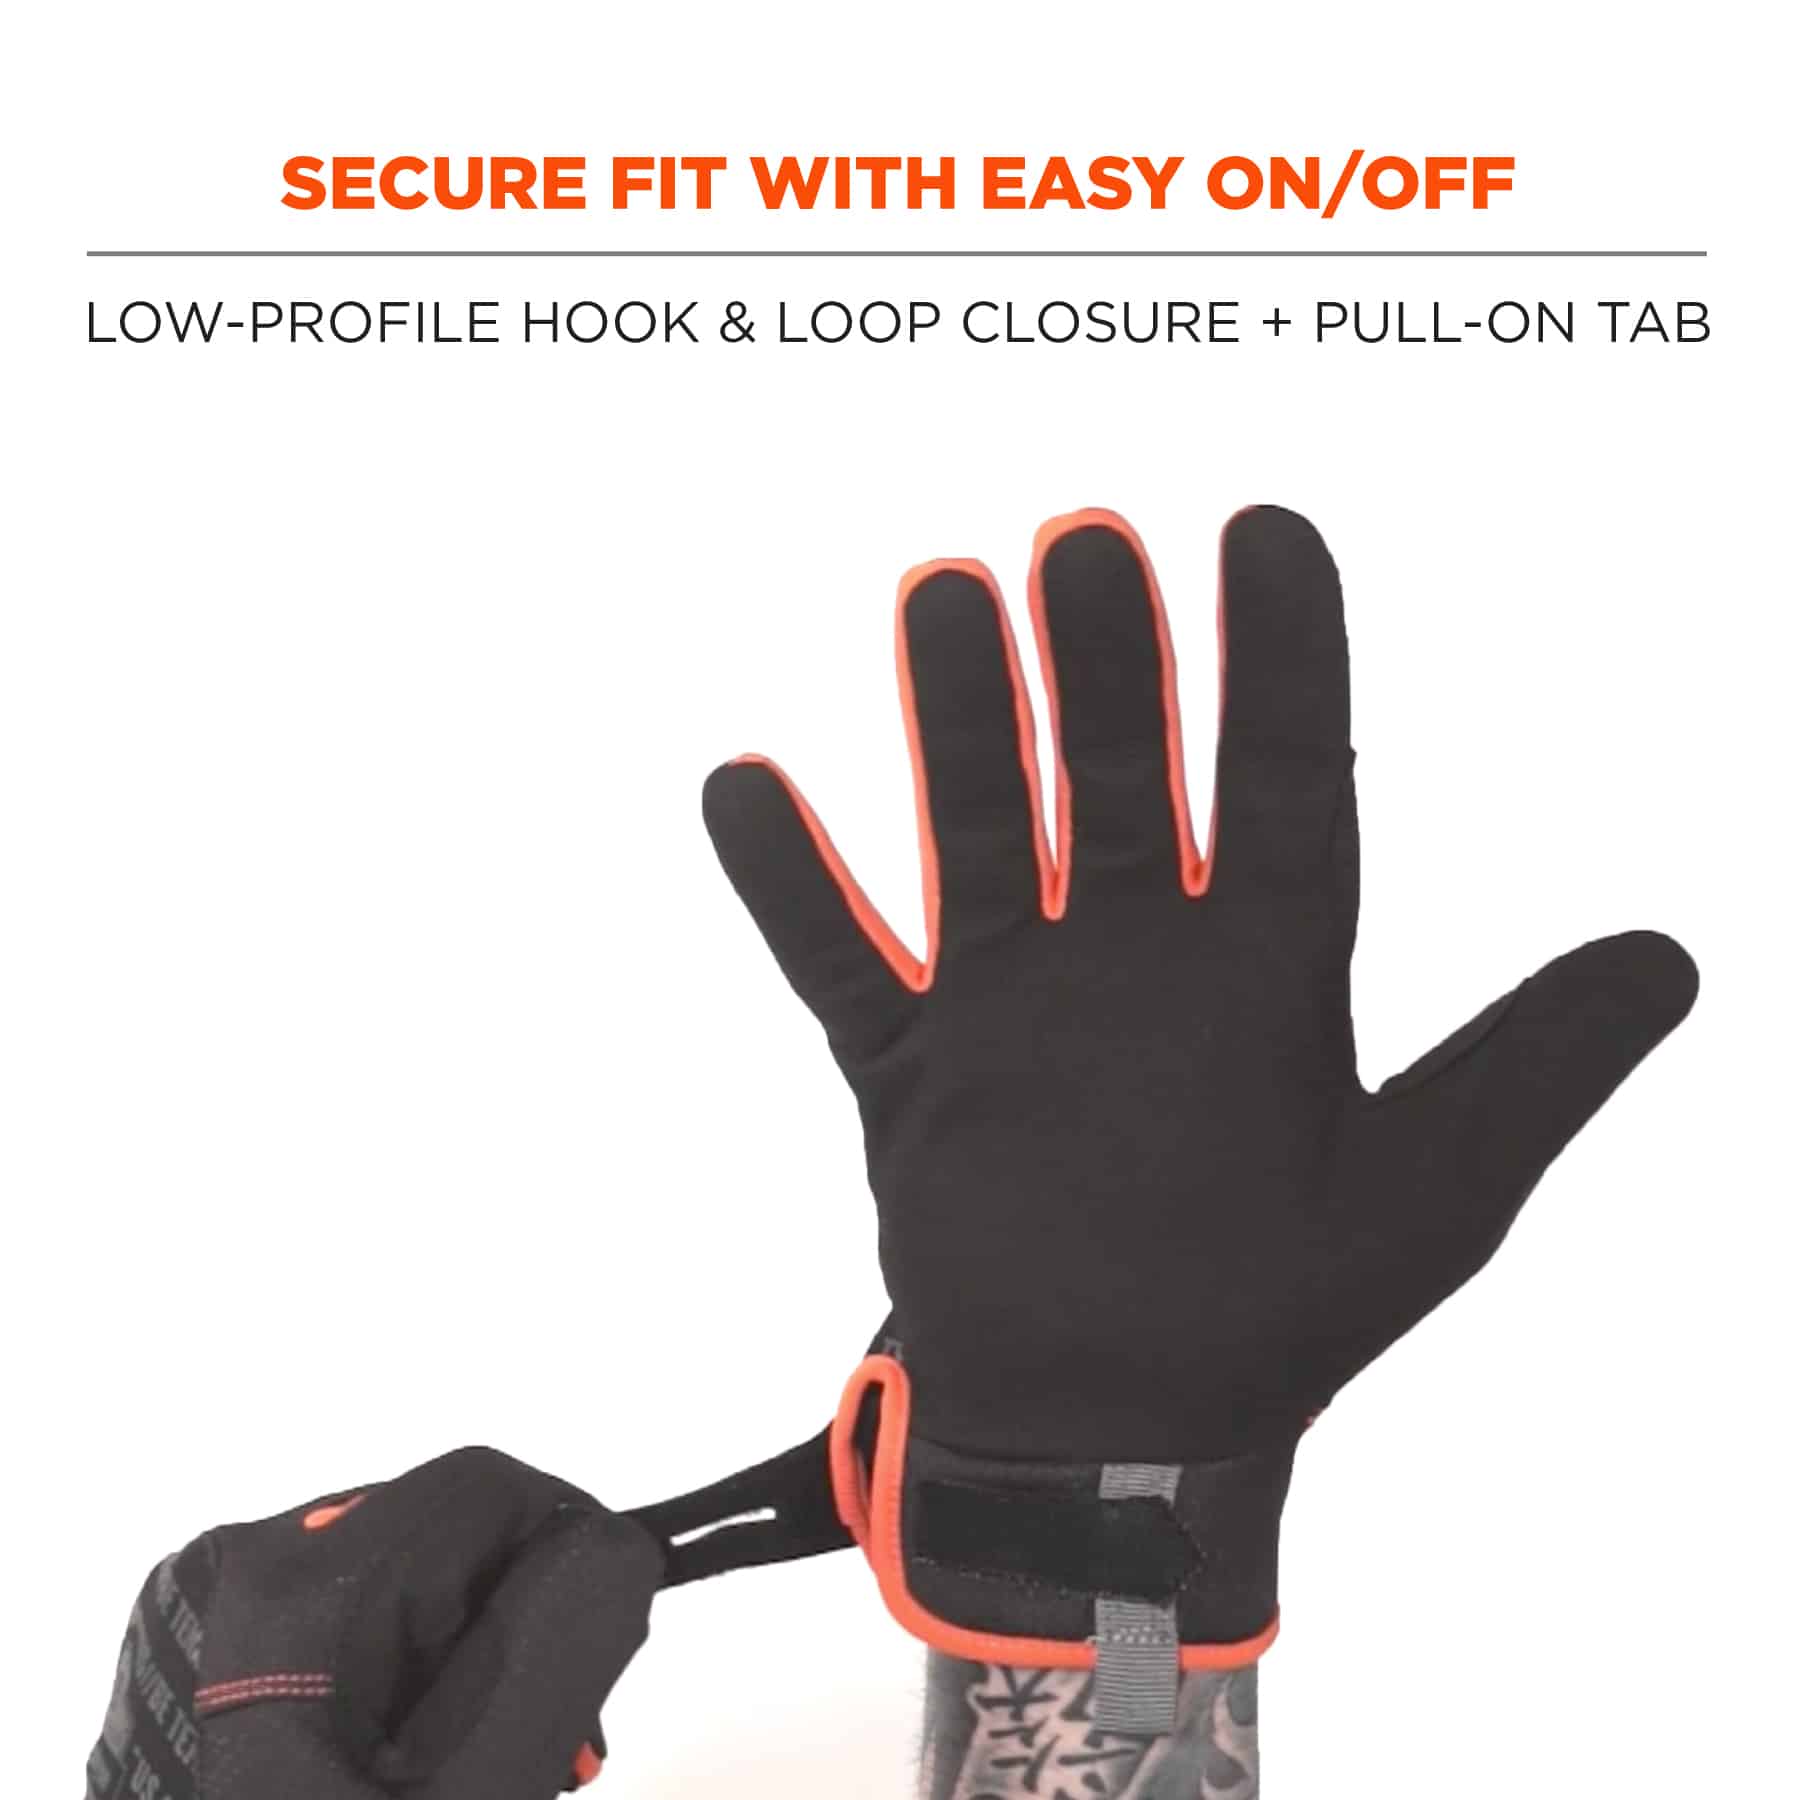 https://www.ergodyne.com/sites/default/files/product-images/17172-812-standard-utility-gloves-black-secure-fit-with-easy-on-off.jpg